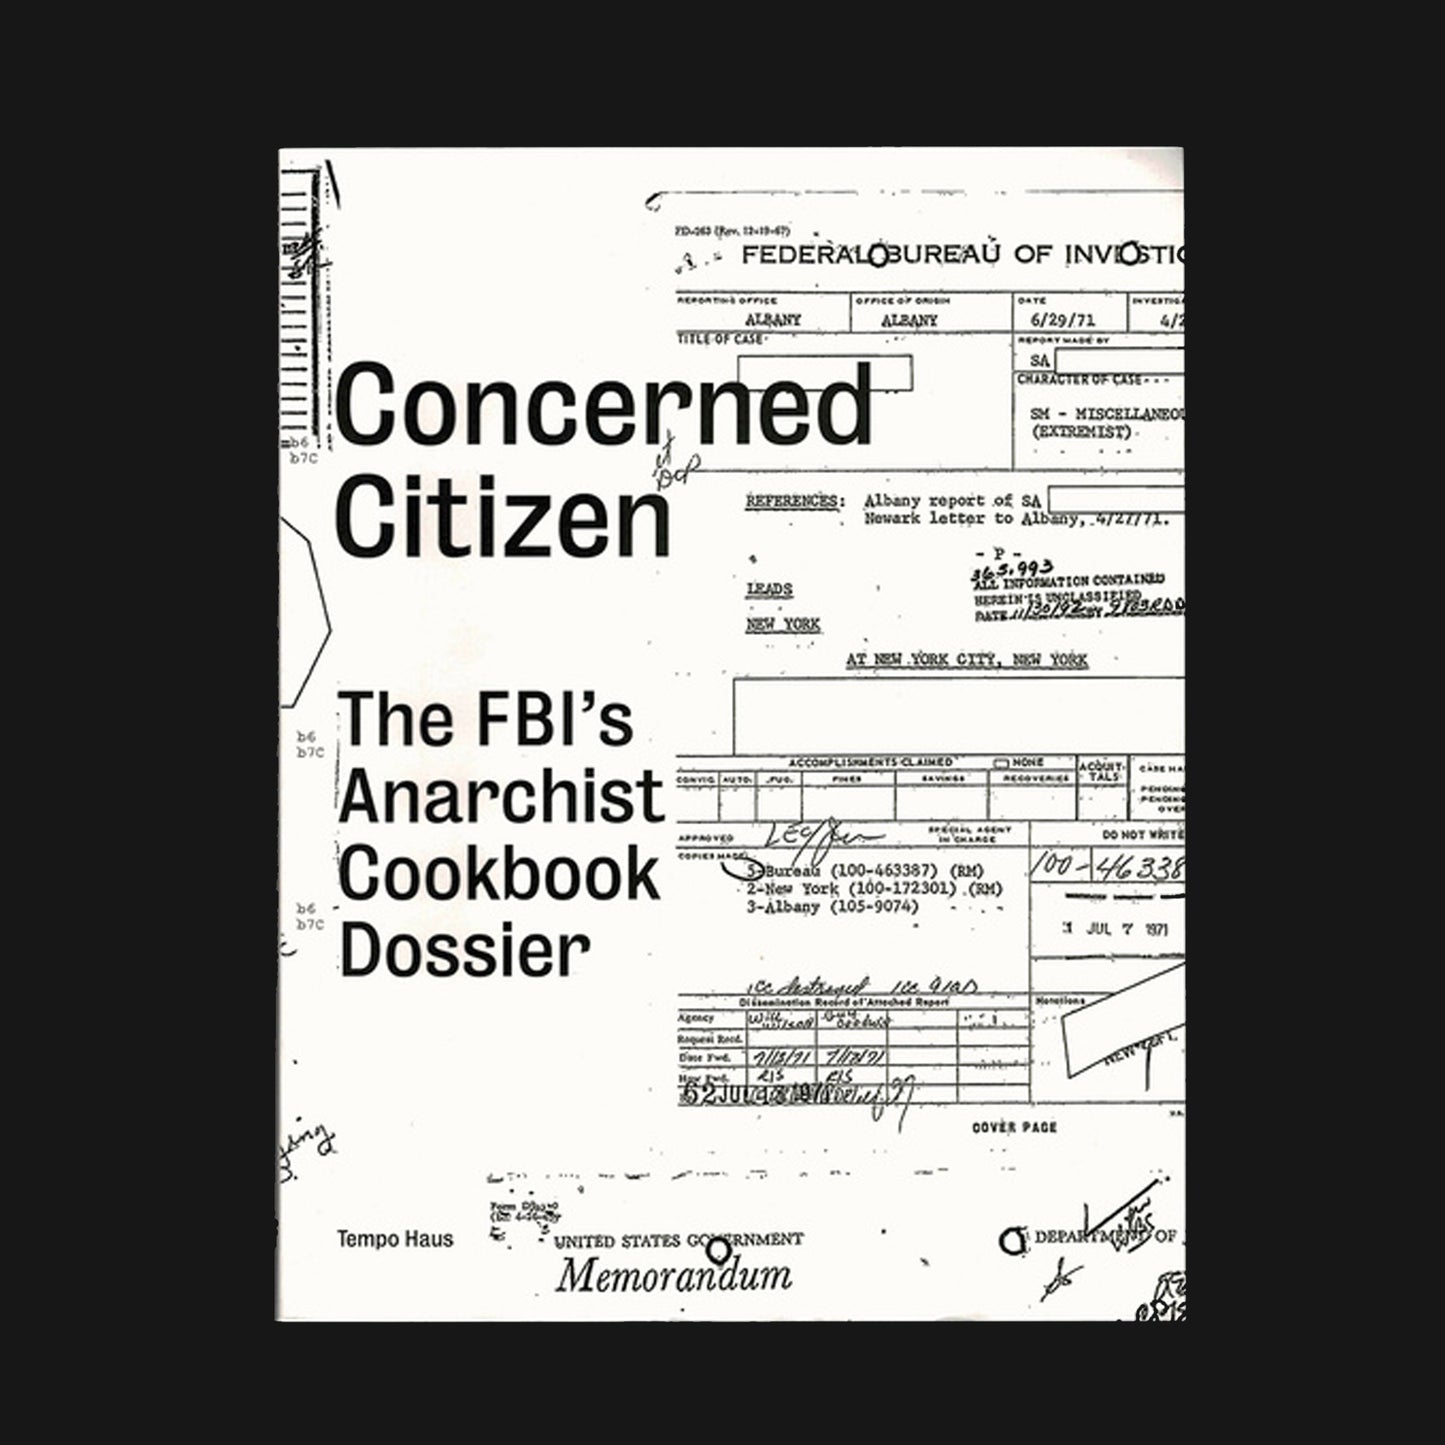 TEMPO HAUS - "CONCERNED CITIZEN: THE FBI'S ANARCHIST COOKBOOK DOSSIER" BOOK